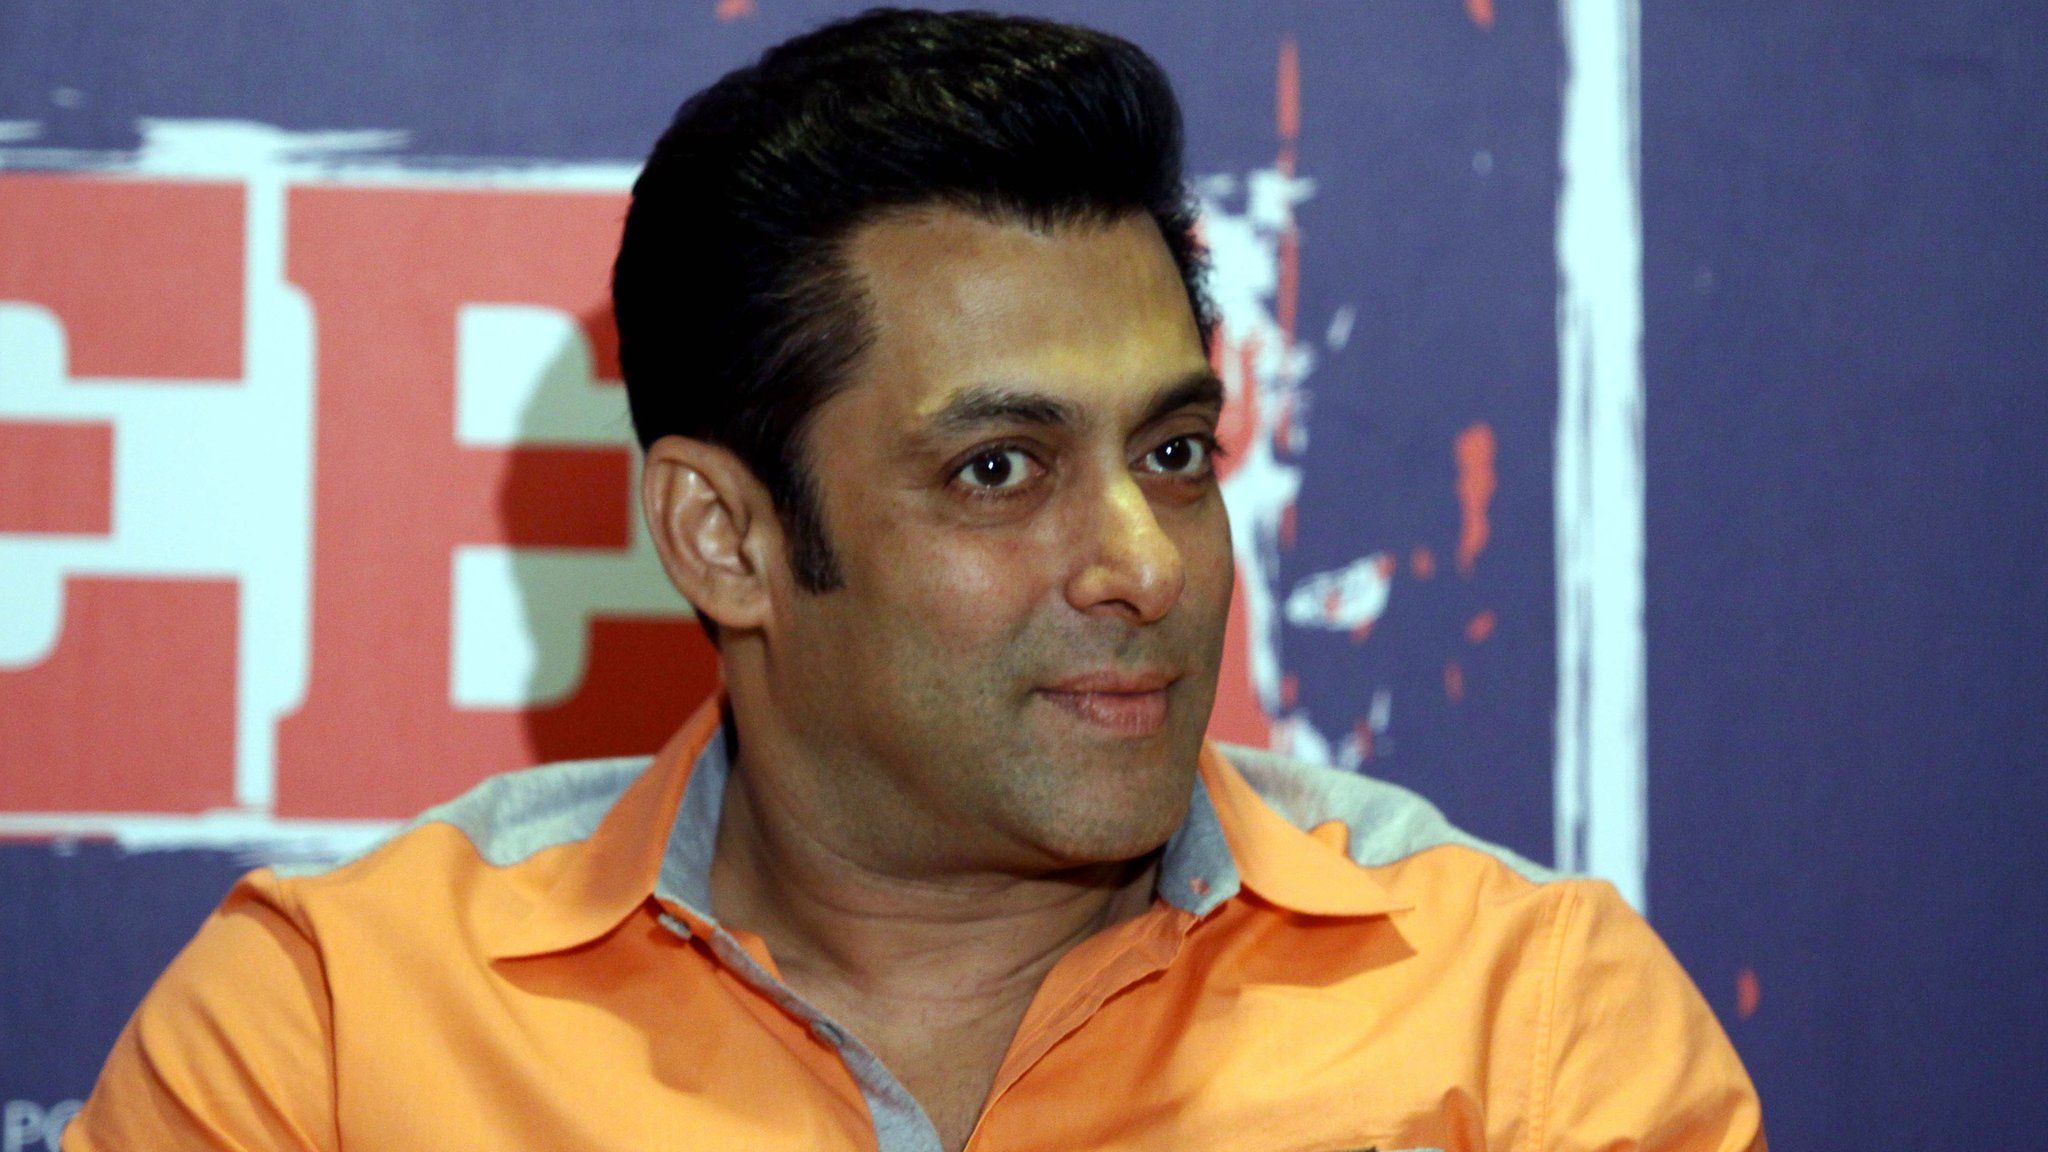 India uproar over Salman Khan 'raped woman' comment - BBC News